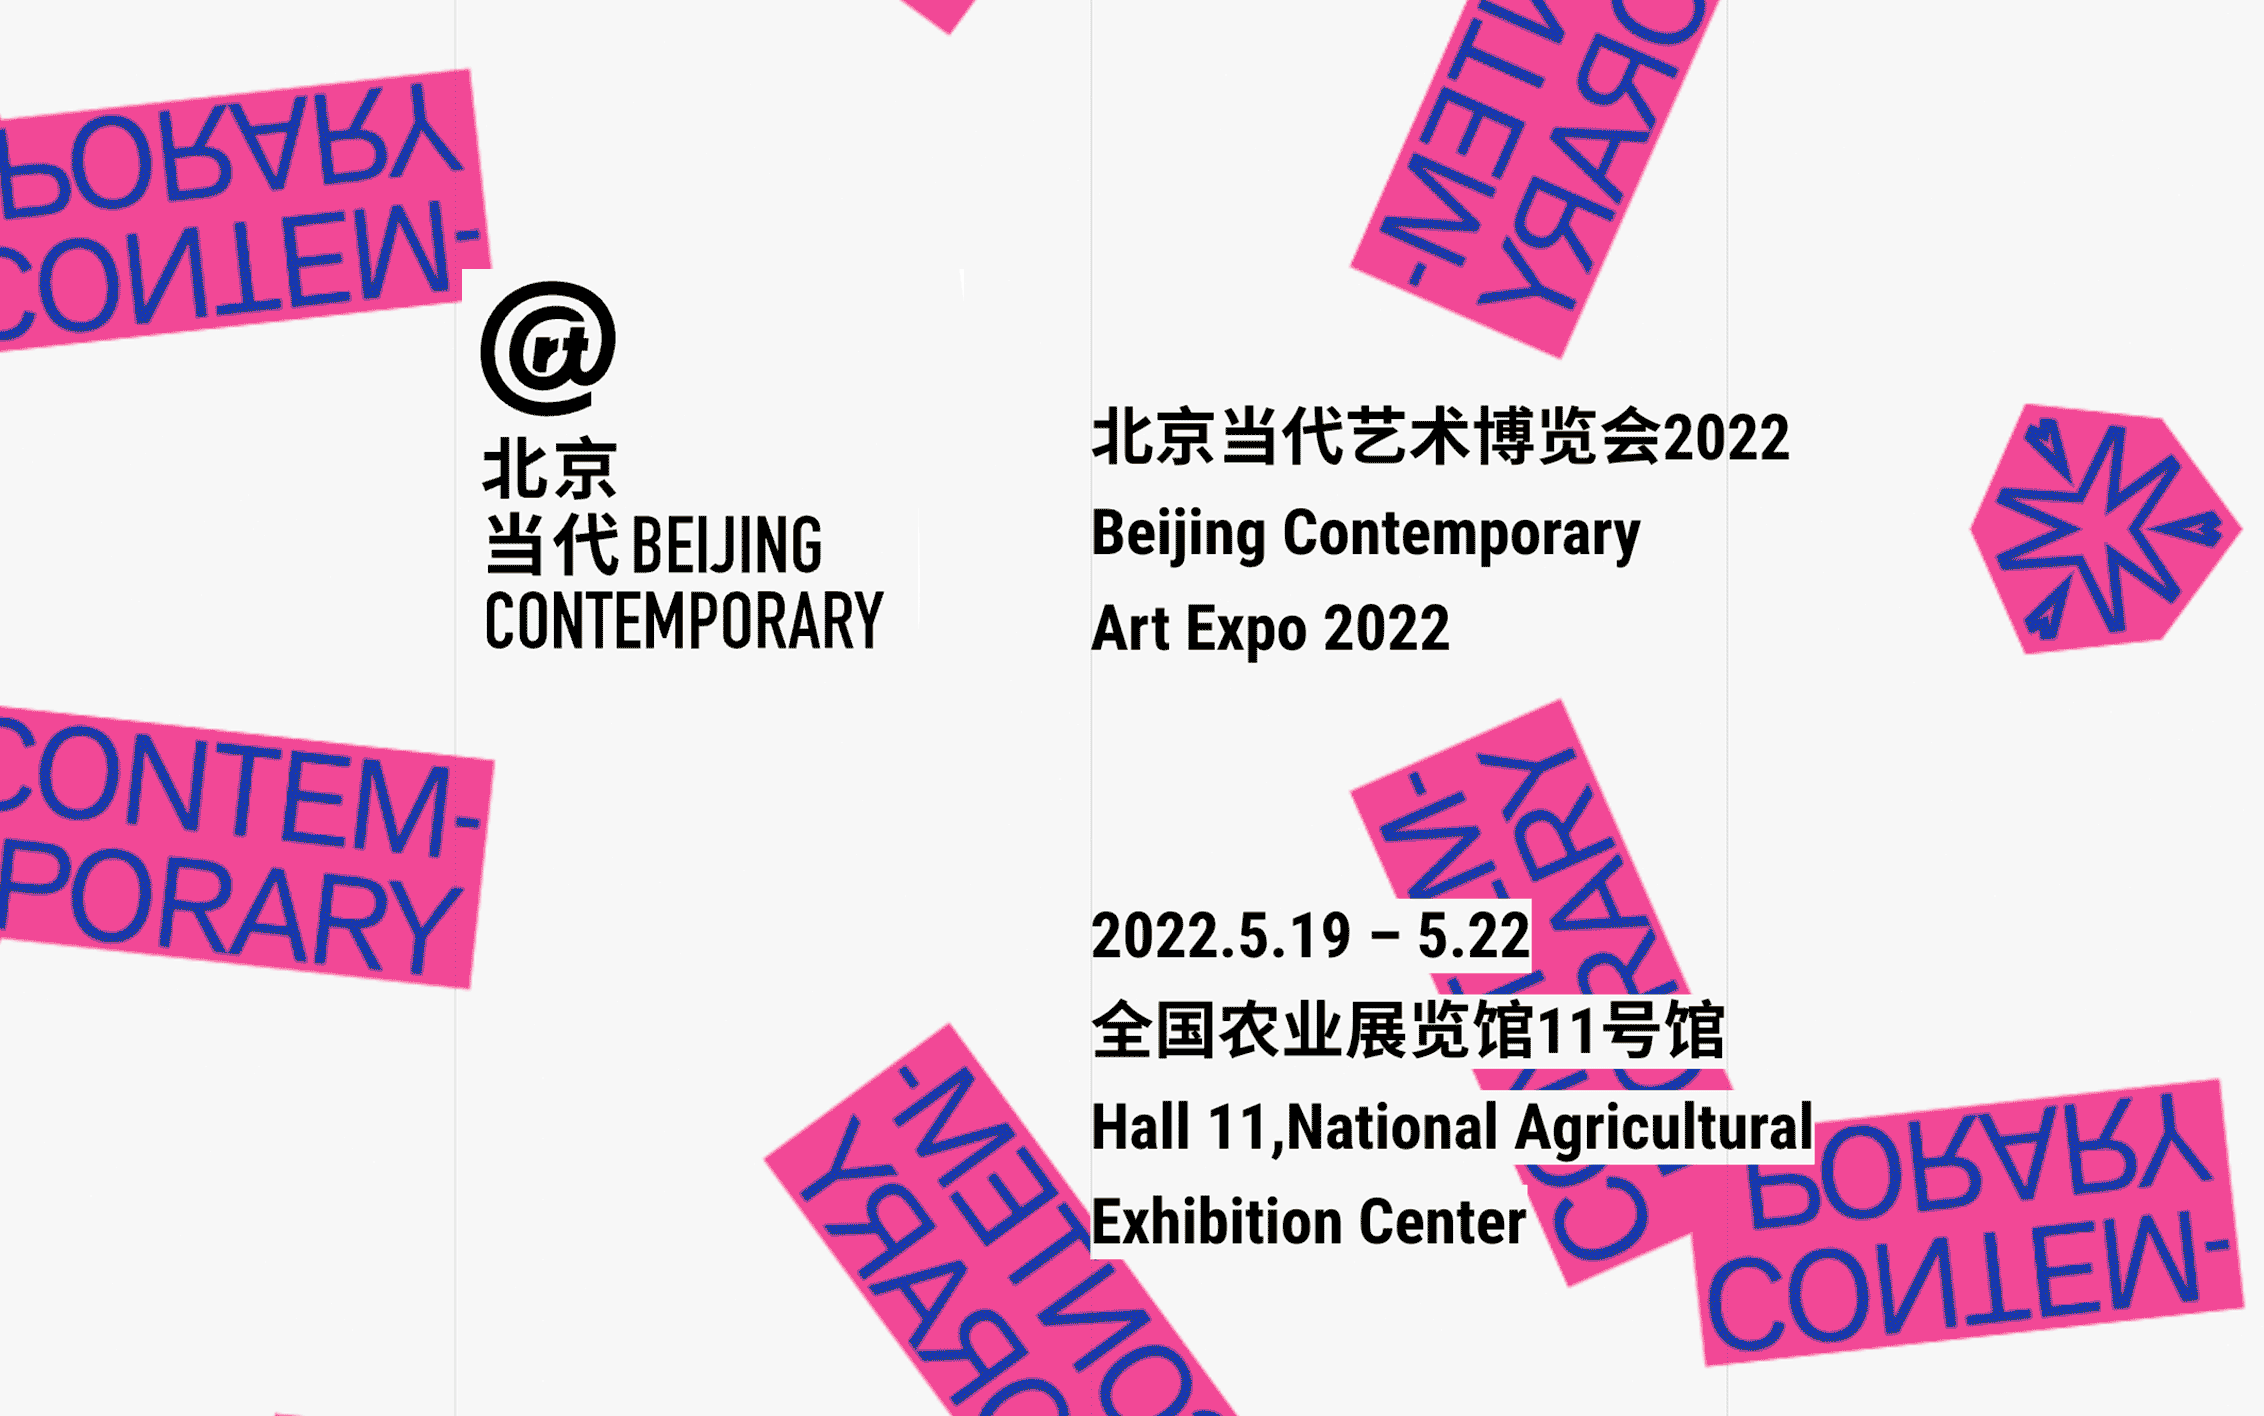 Contemporary art art fair, Beijing Contemporary Art Expo 2022 at Galerie Urs Meile, Beijing, China